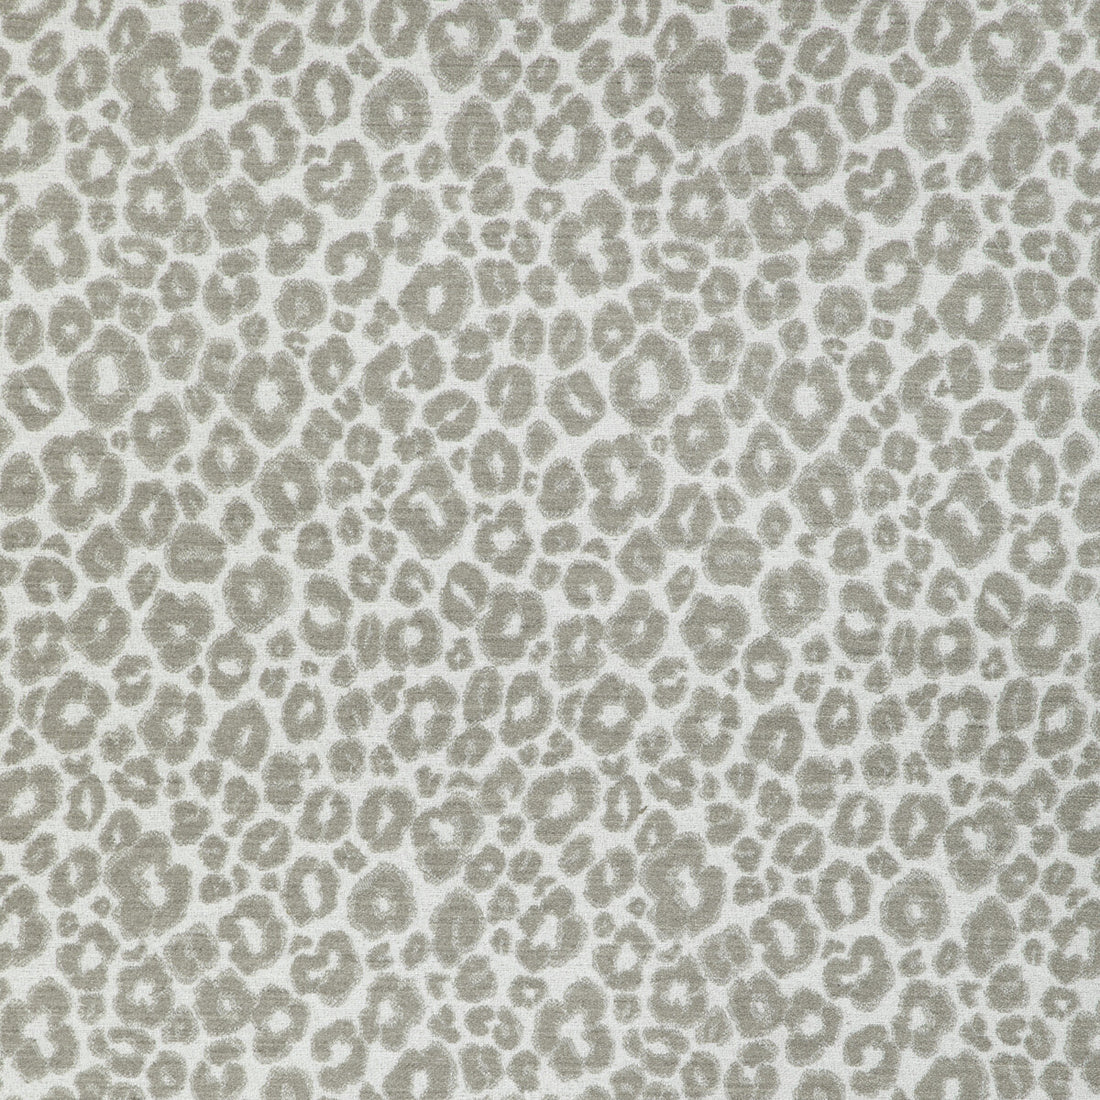 Kravet Design fabric in 36768-11 color - pattern 36768.11.0 - by Kravet Design in the Sea Island Indoor/Outdoor collection